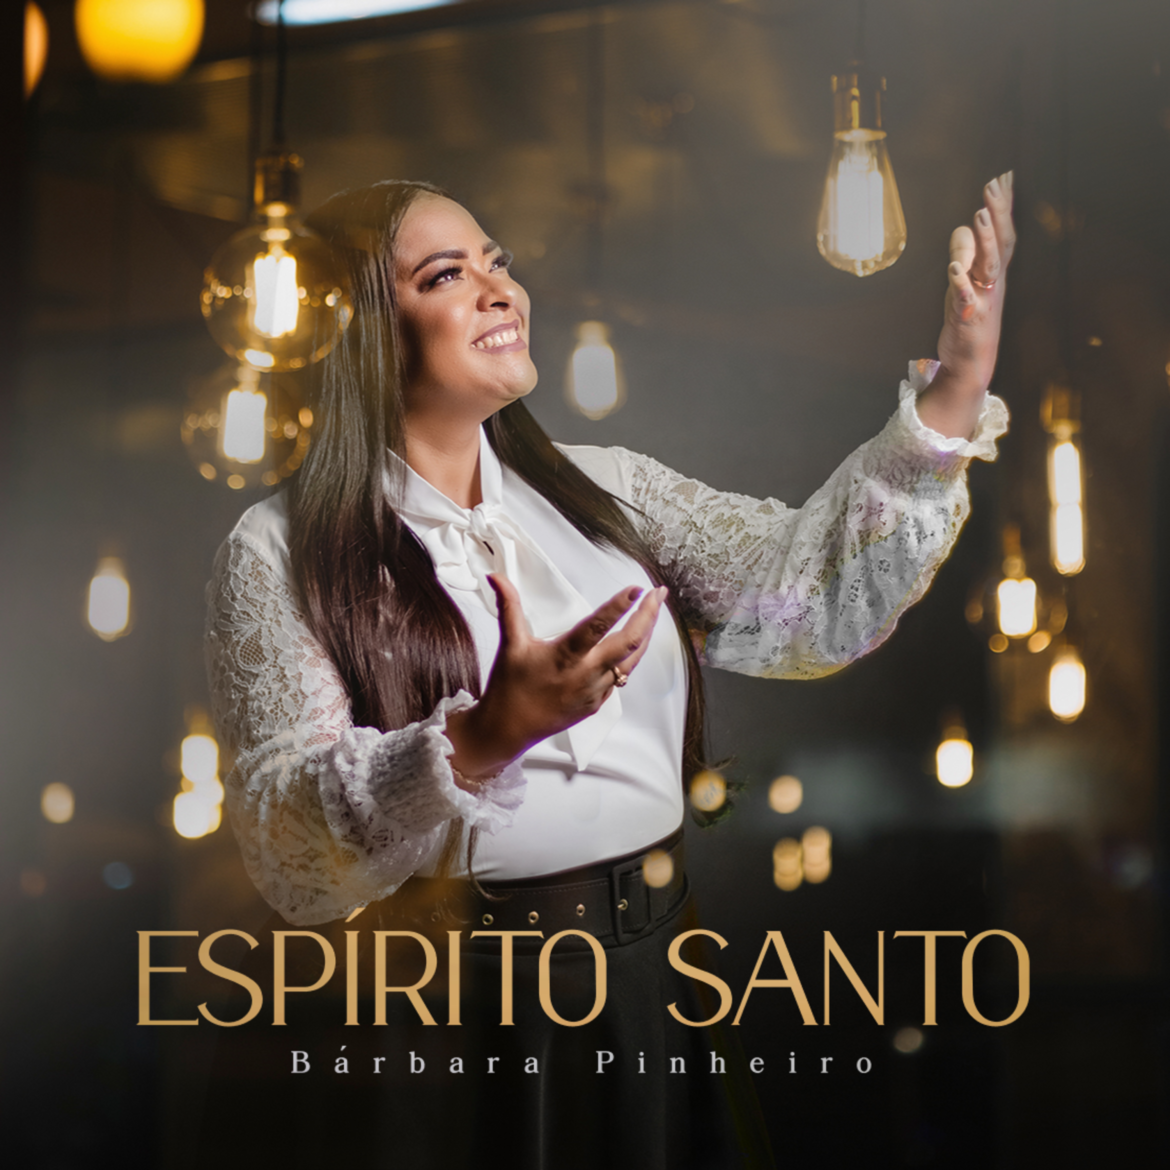 Cantora Bárbara Pinheiro lança “Espírito Santo”, single que fortalece a fé dos abatidos